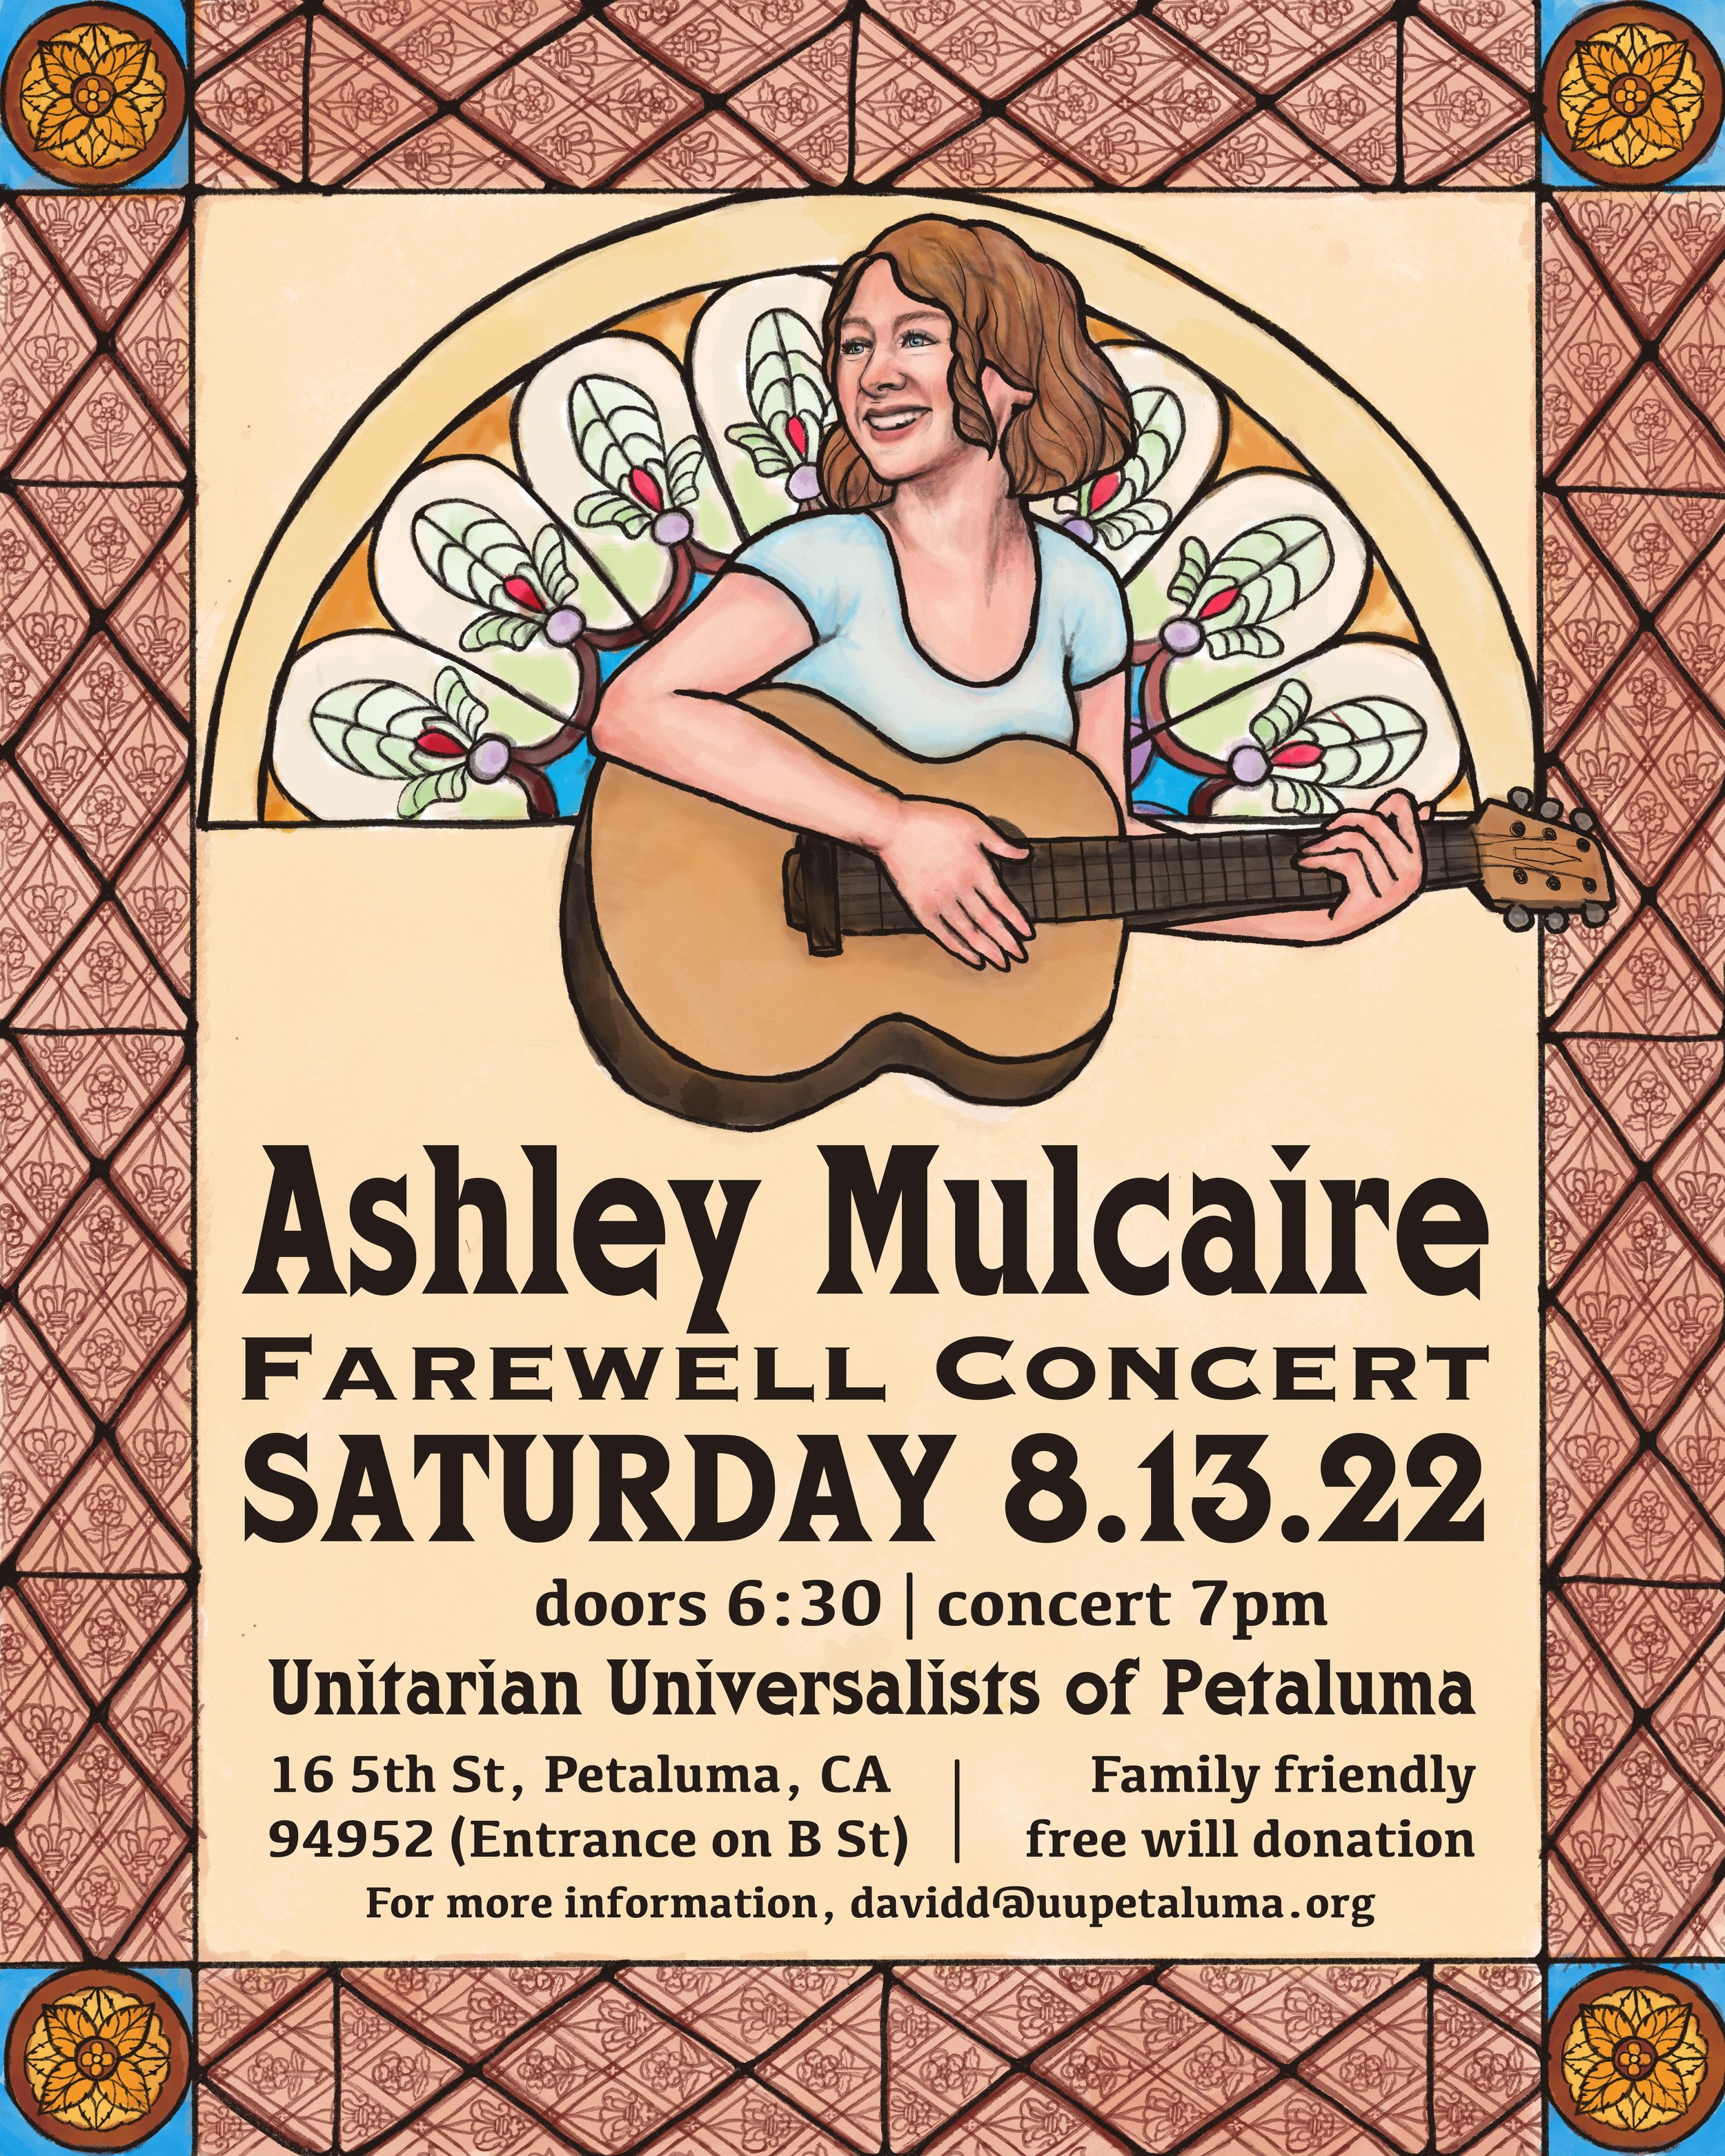 Ashley Mulcaire Farewell Concert Poster